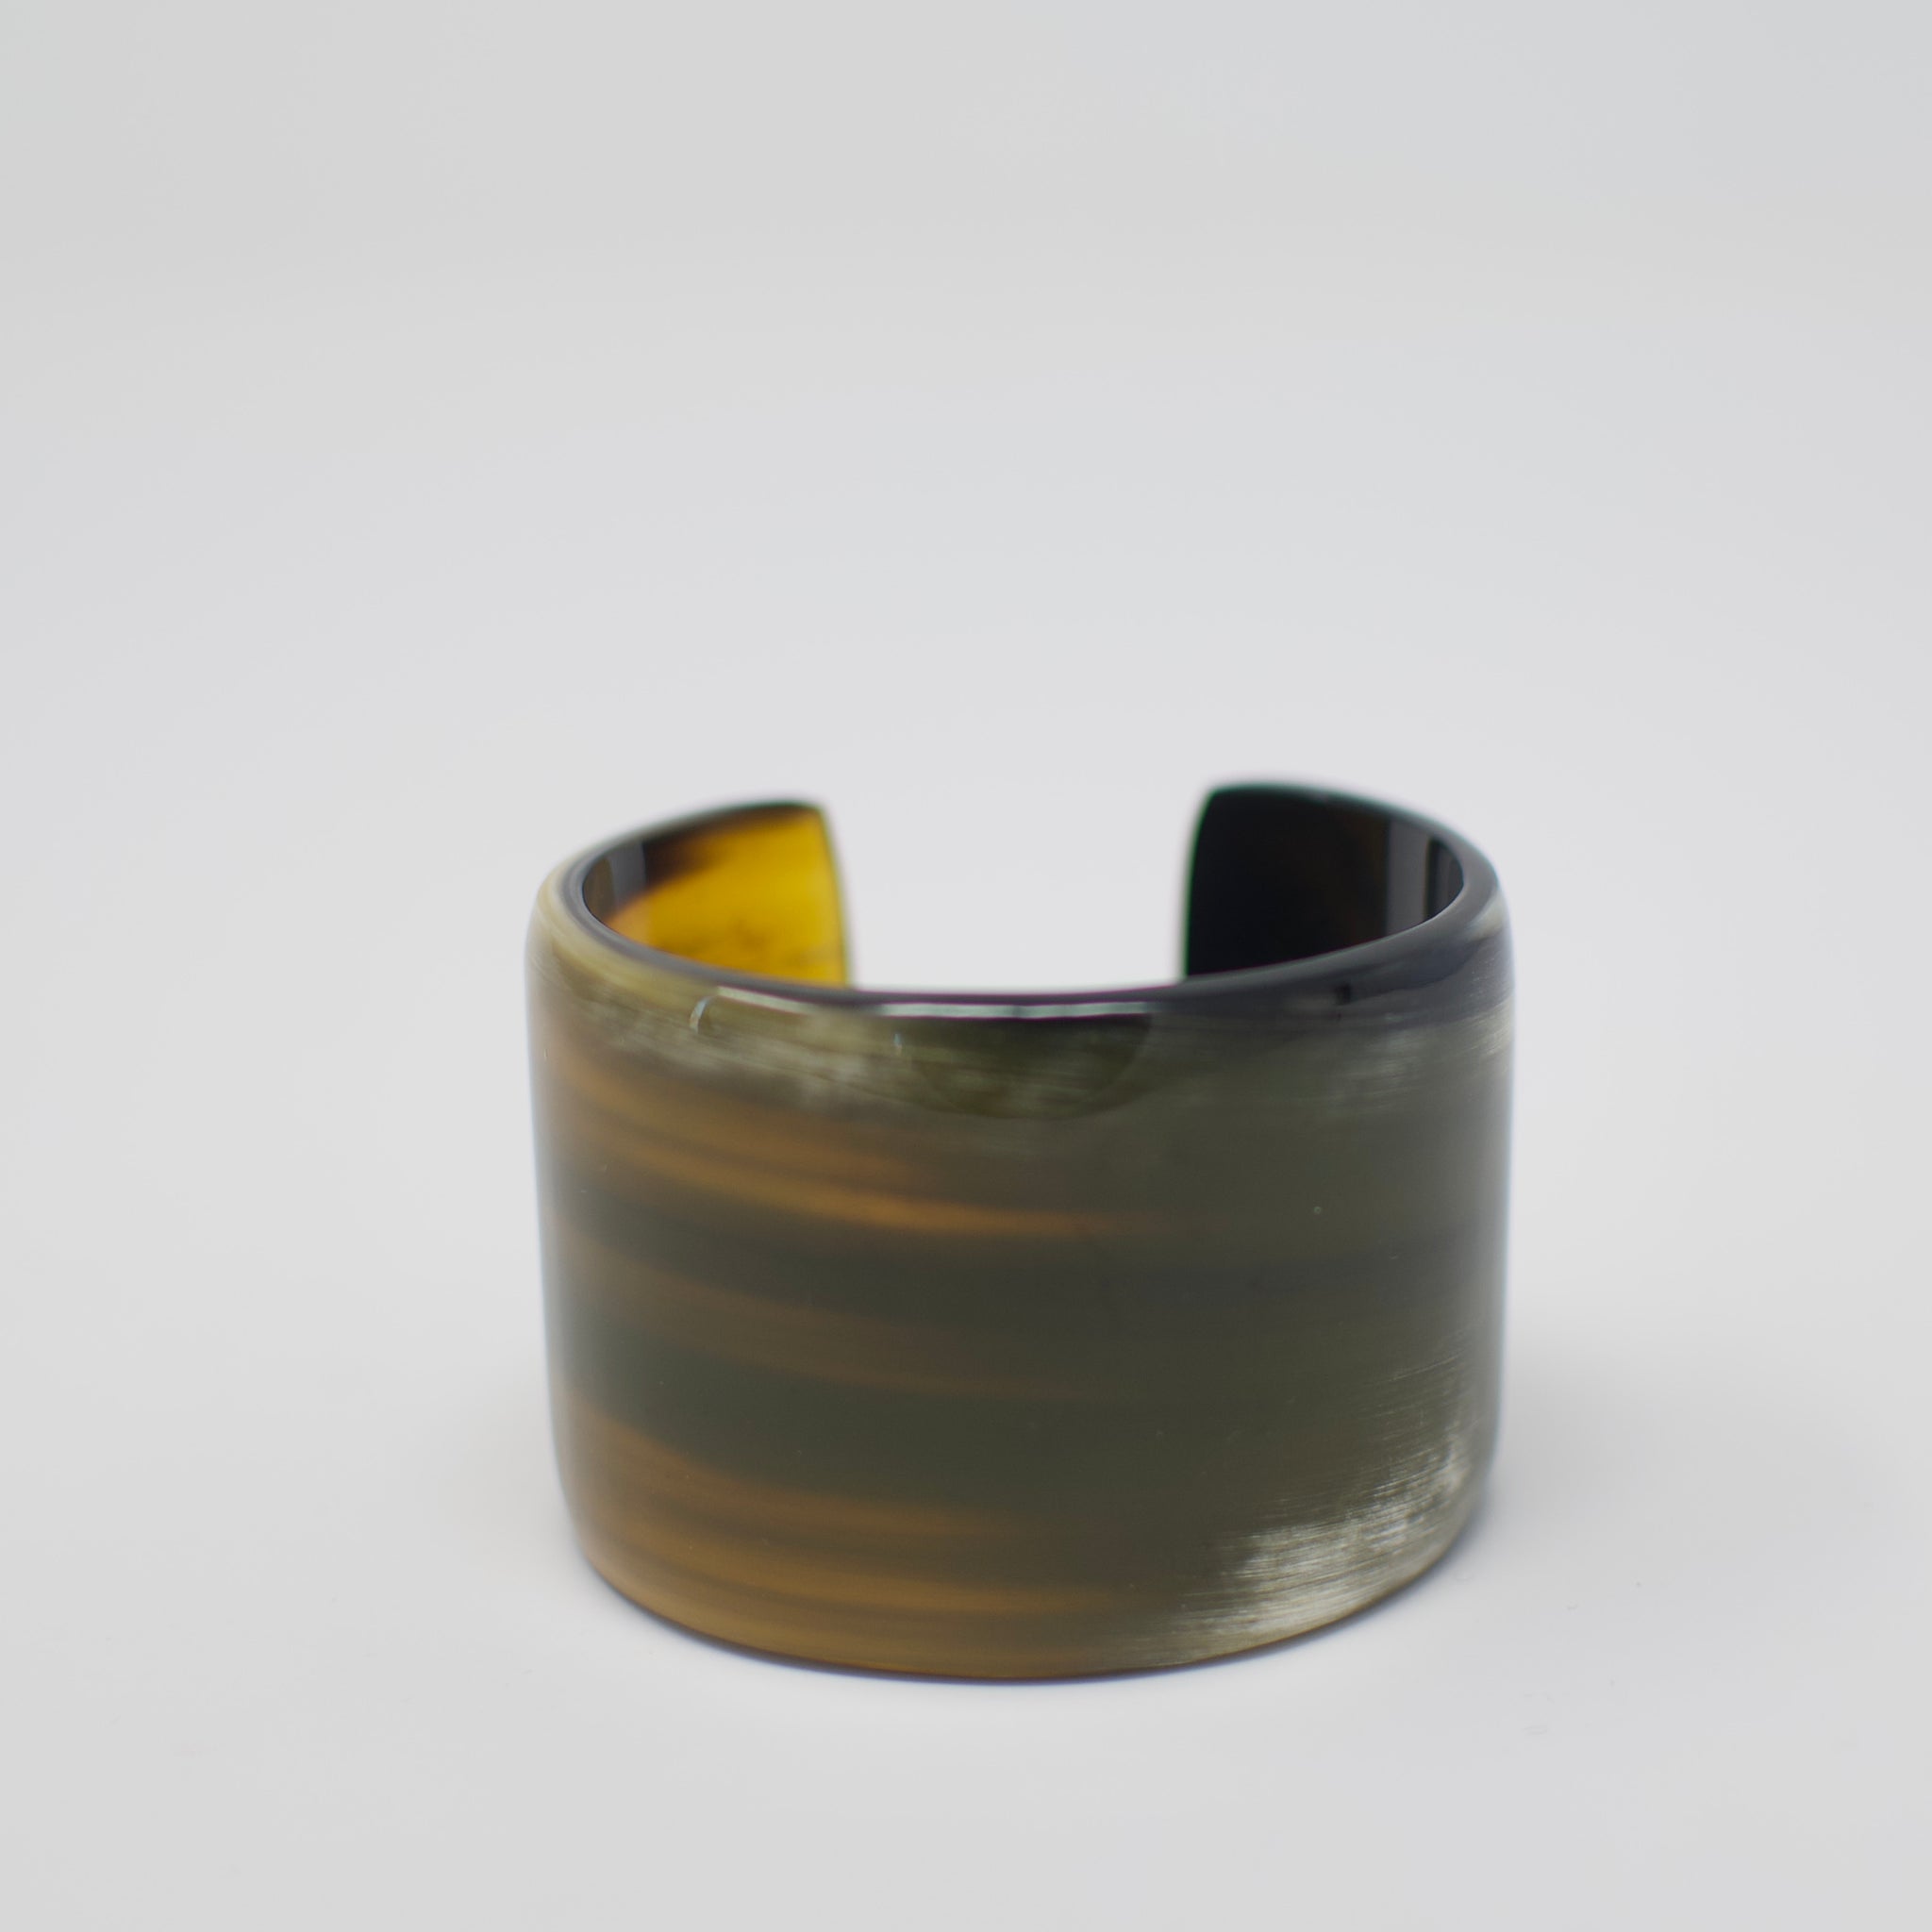 Horn Cuff Bracelet-Black